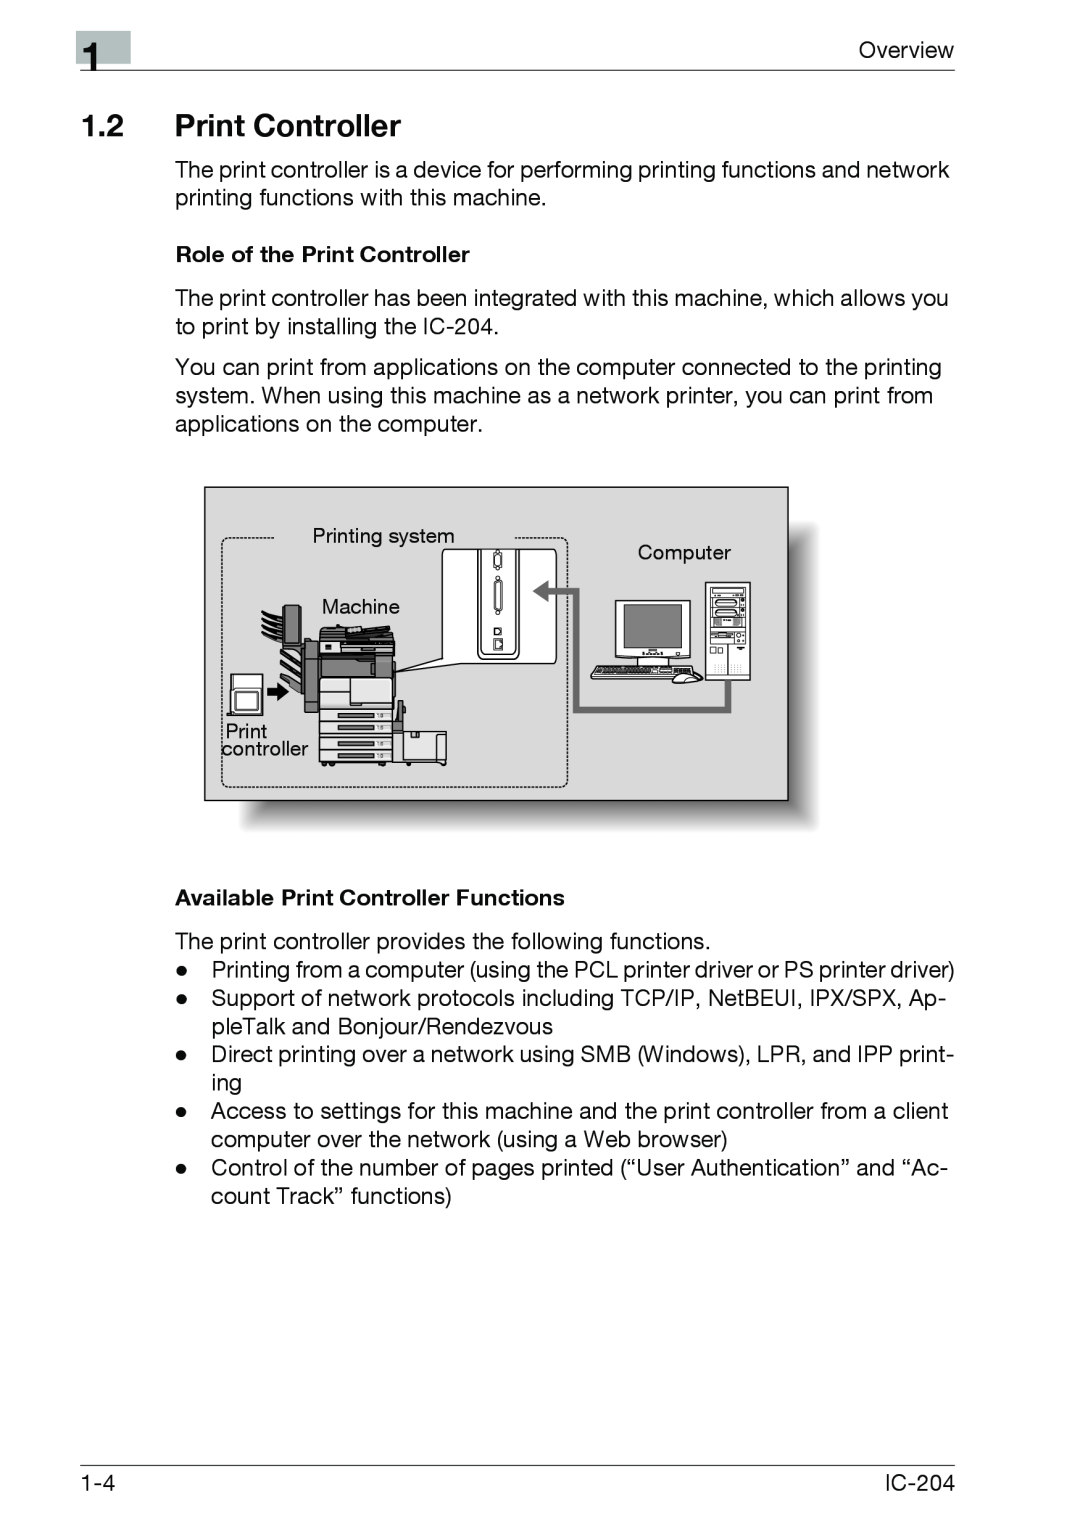 Konica Minolta IC-204 manual 1.2Print Controller, Role of the Print Controller, Available Print Controller Functions 